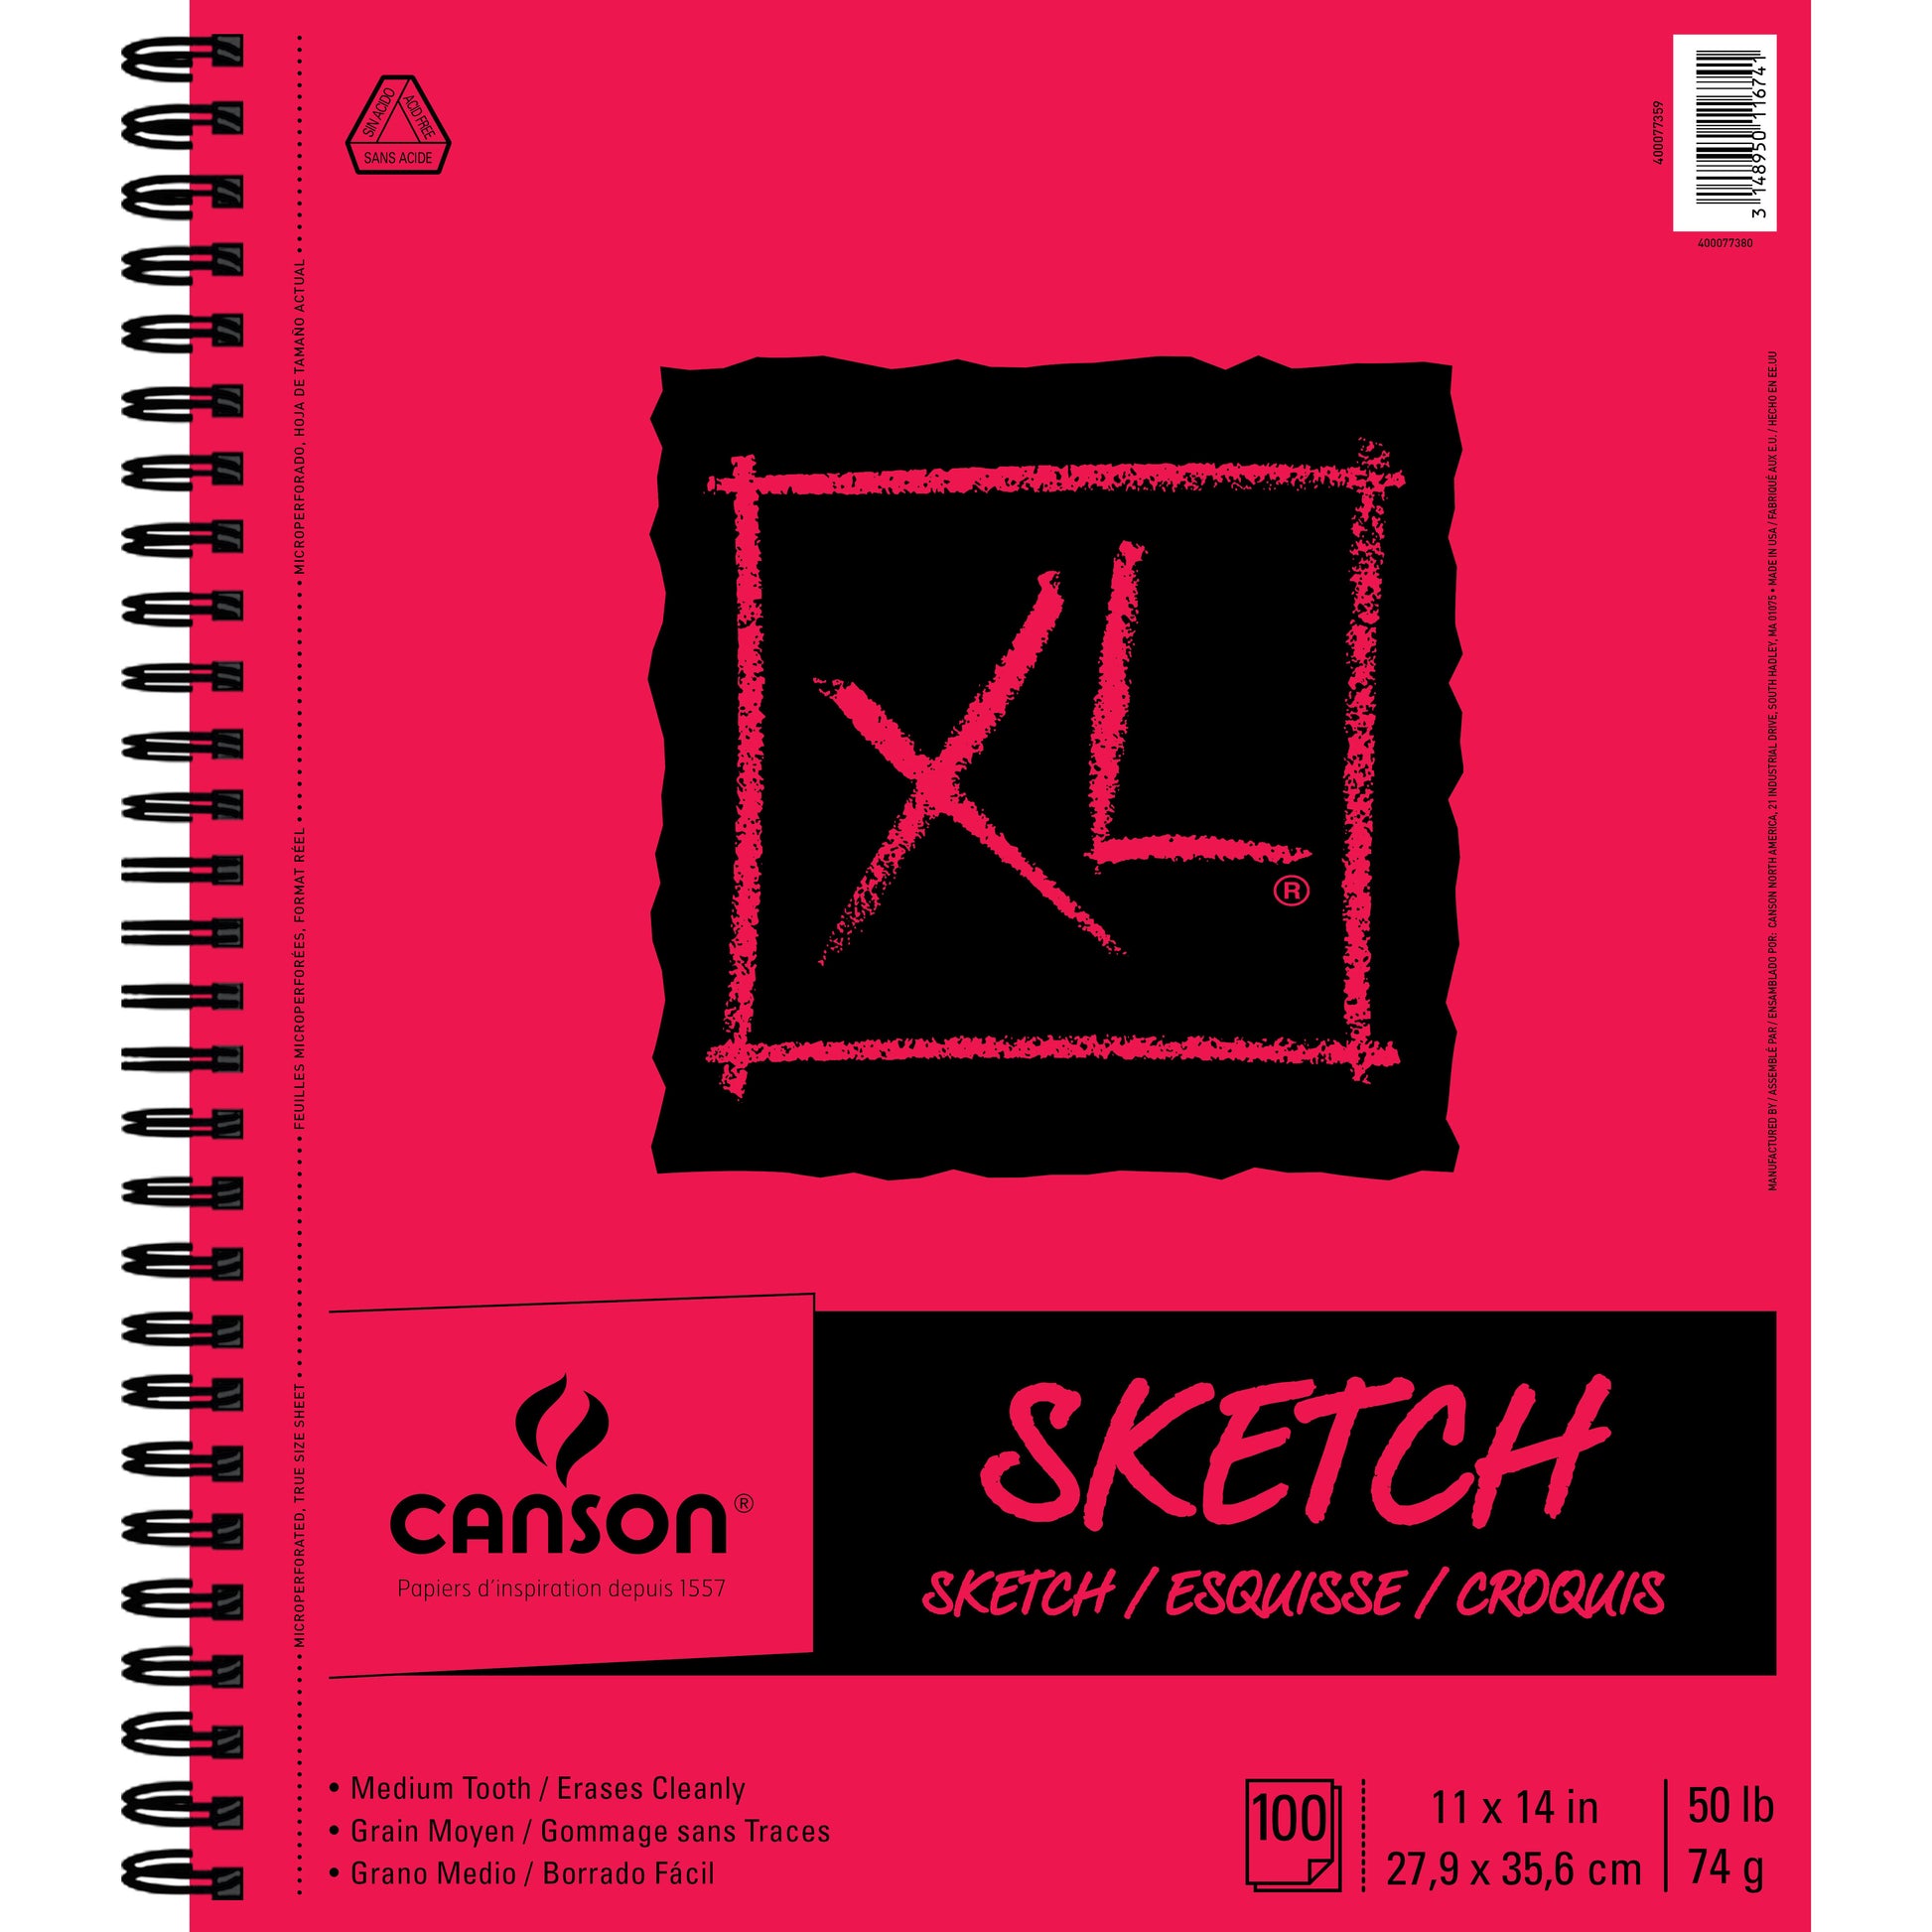 Canson XL Black Drawing Pad, 7 x 10, 40 Shts./Pad 